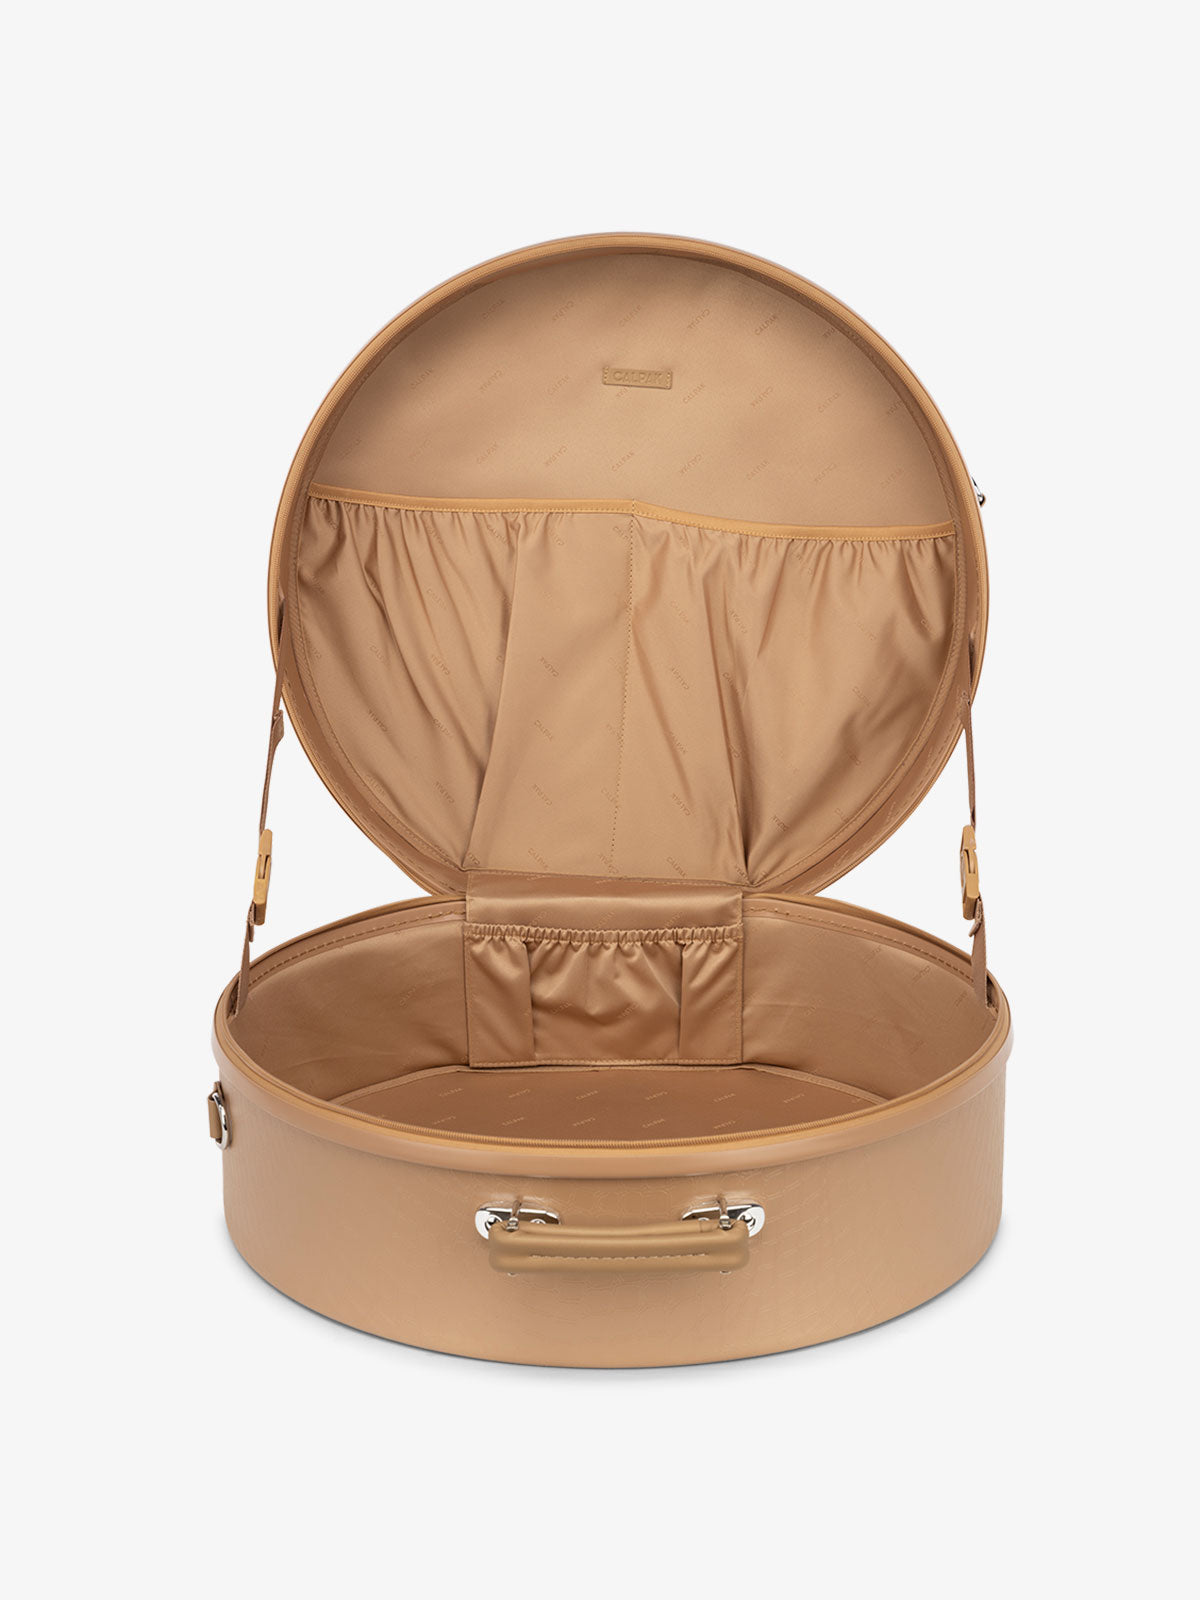 Hat Box Organizer Round Travel Hat Boxes Foldable Hat Storage Bag